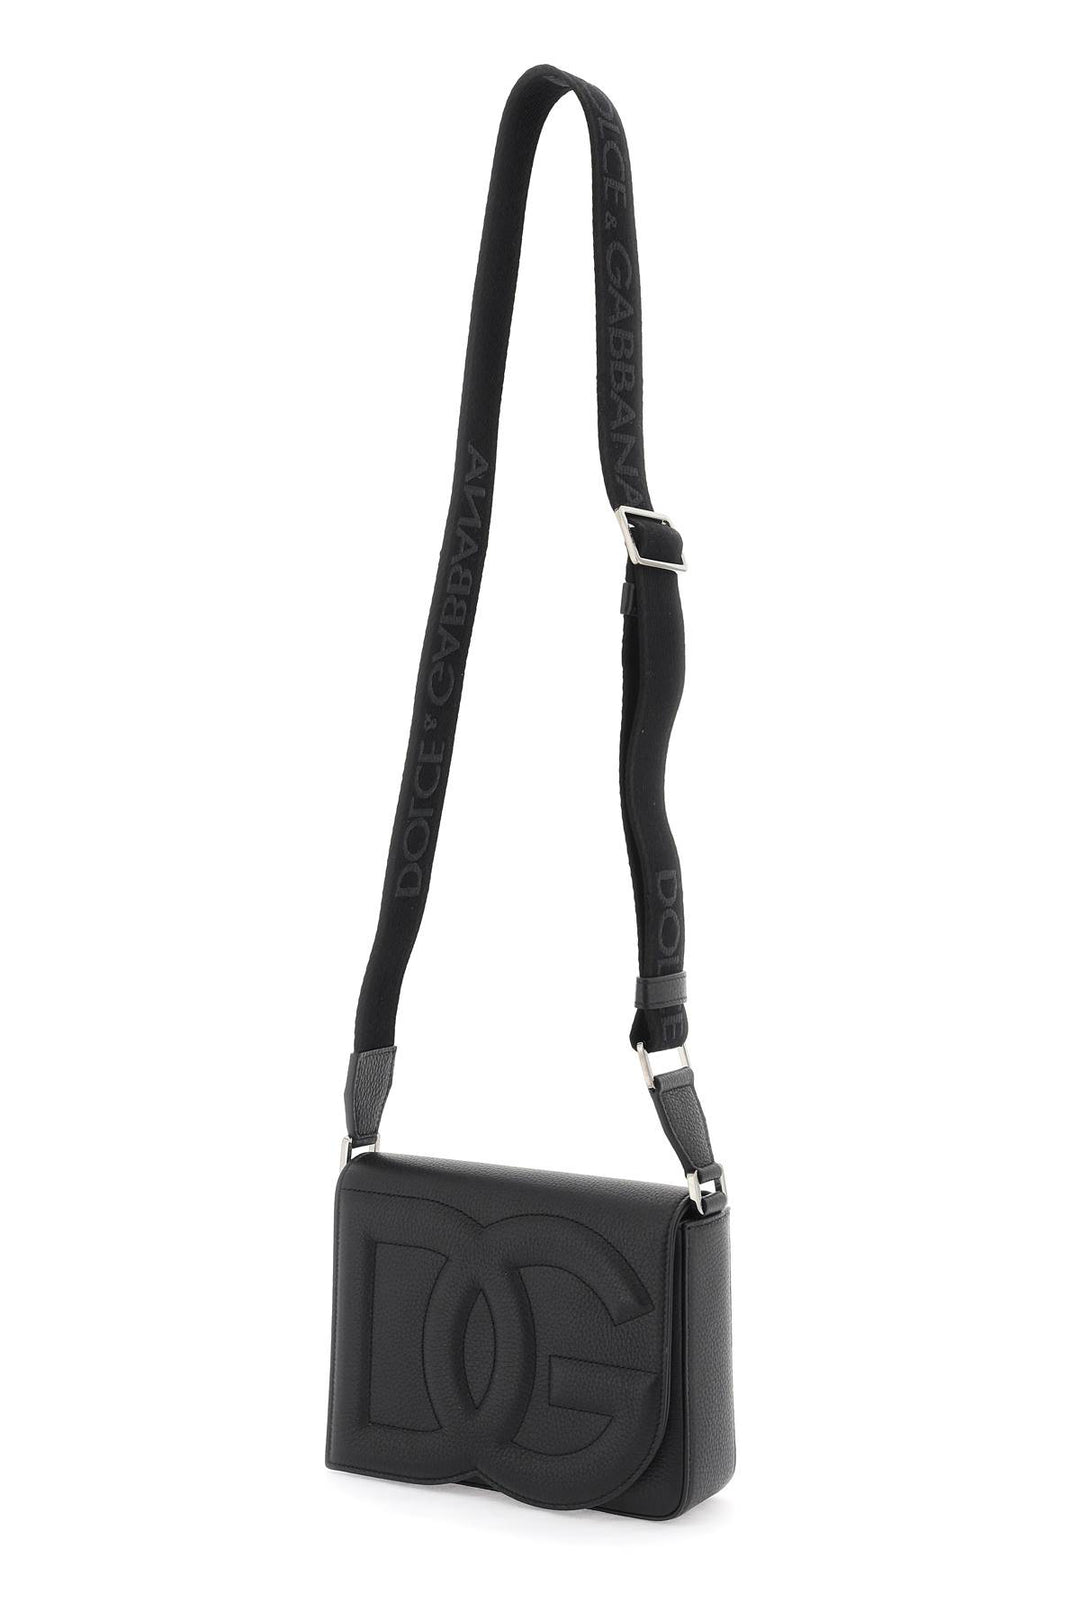 Dolce & Gabbana Medium Sized Dg Logo Shoulder Bag   Black